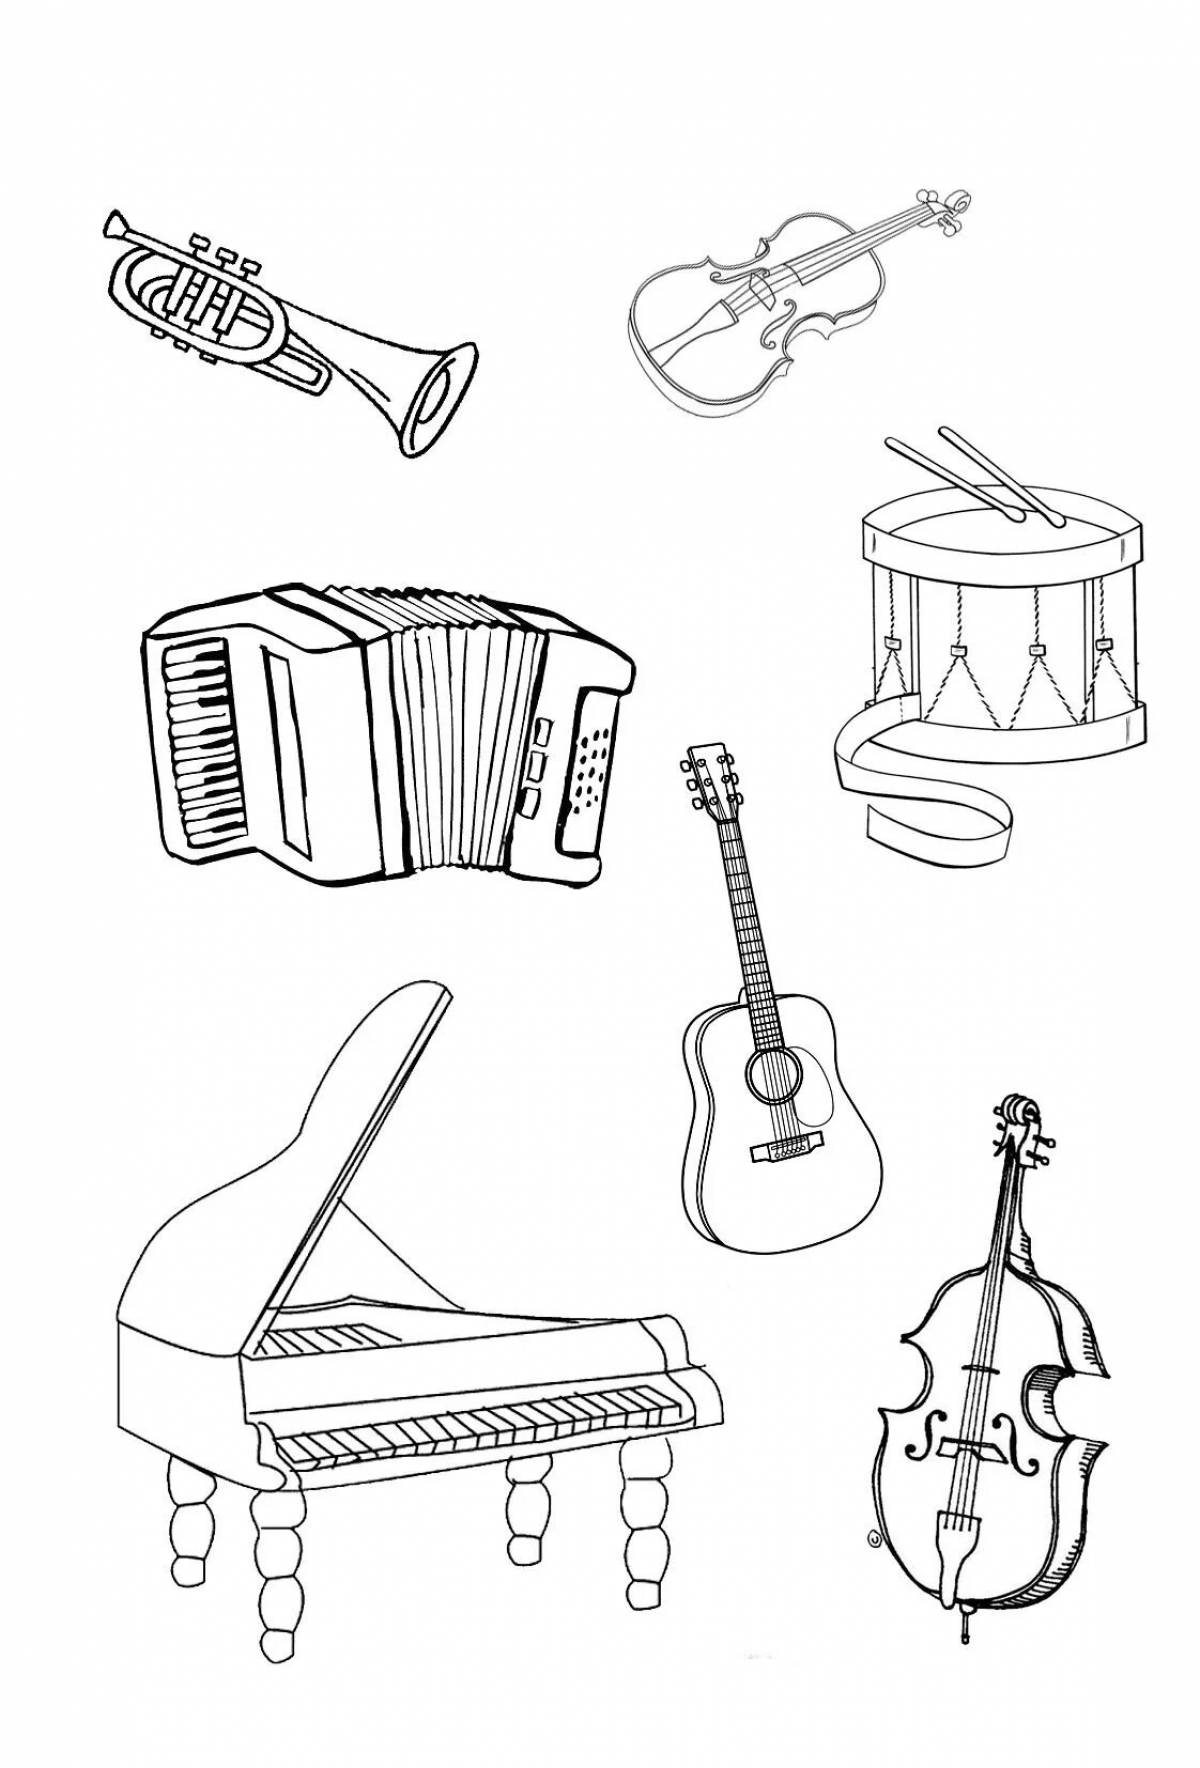 Musical instruments 2 class #6